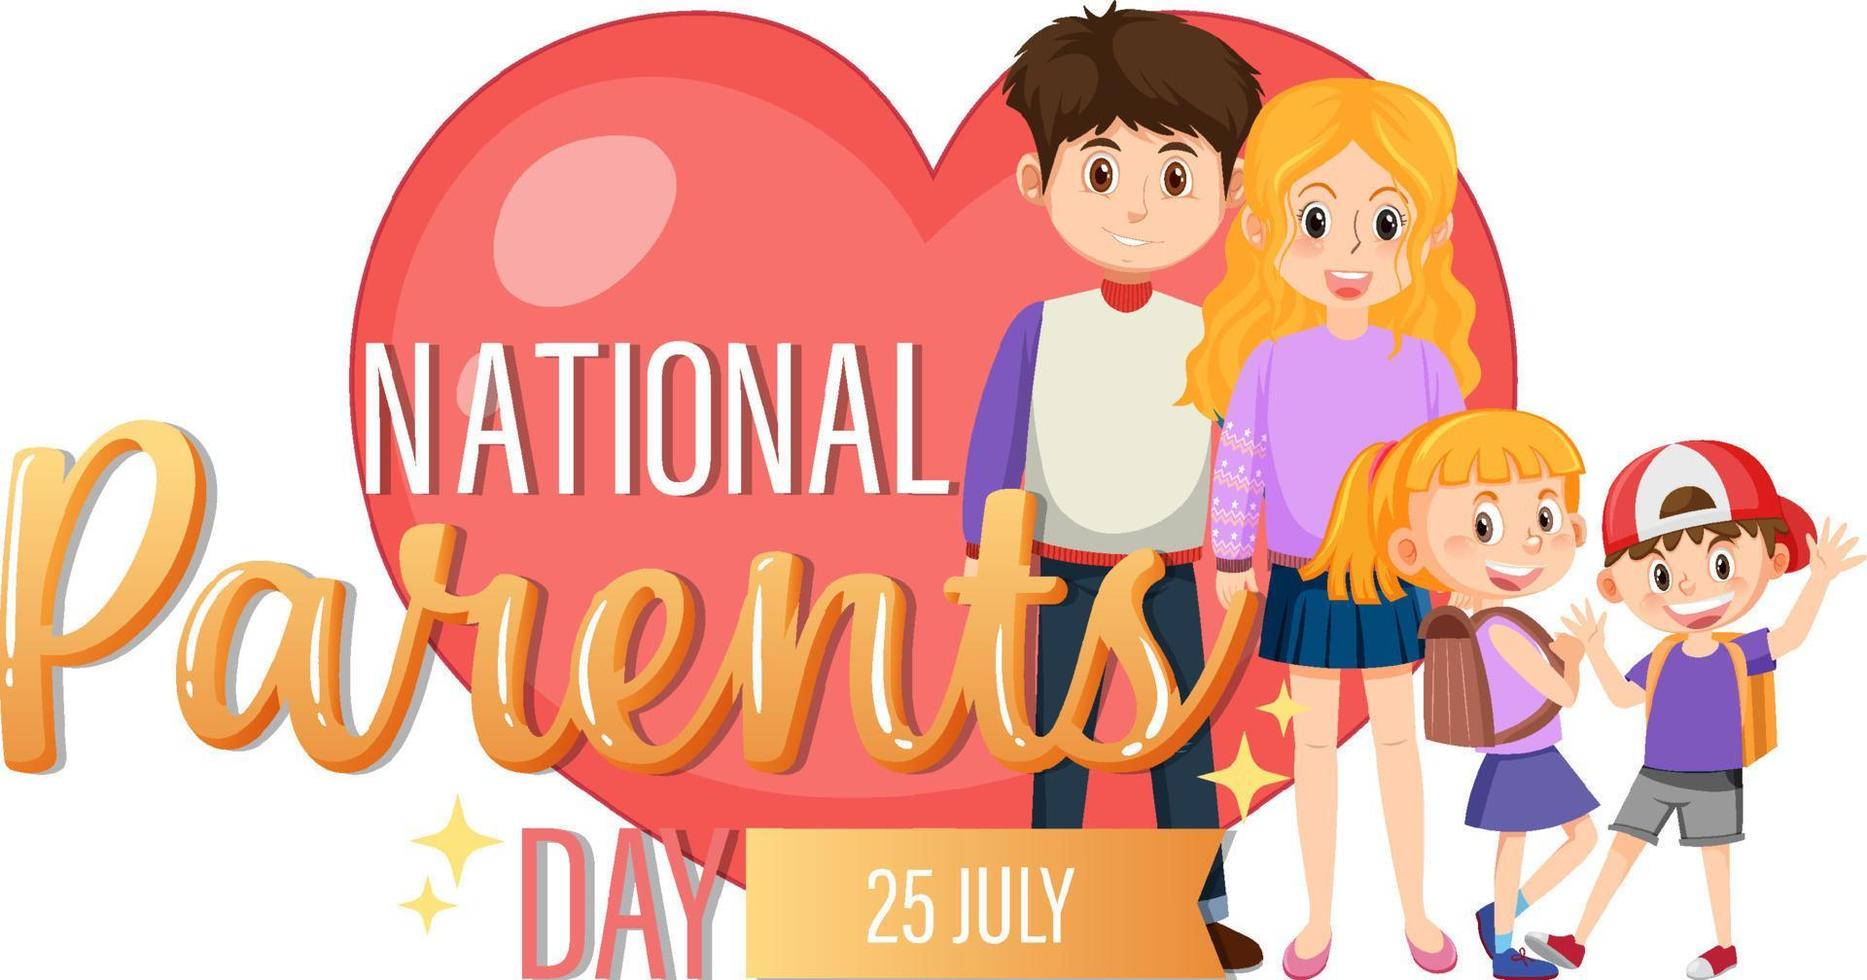 National Parents Day banner design vector